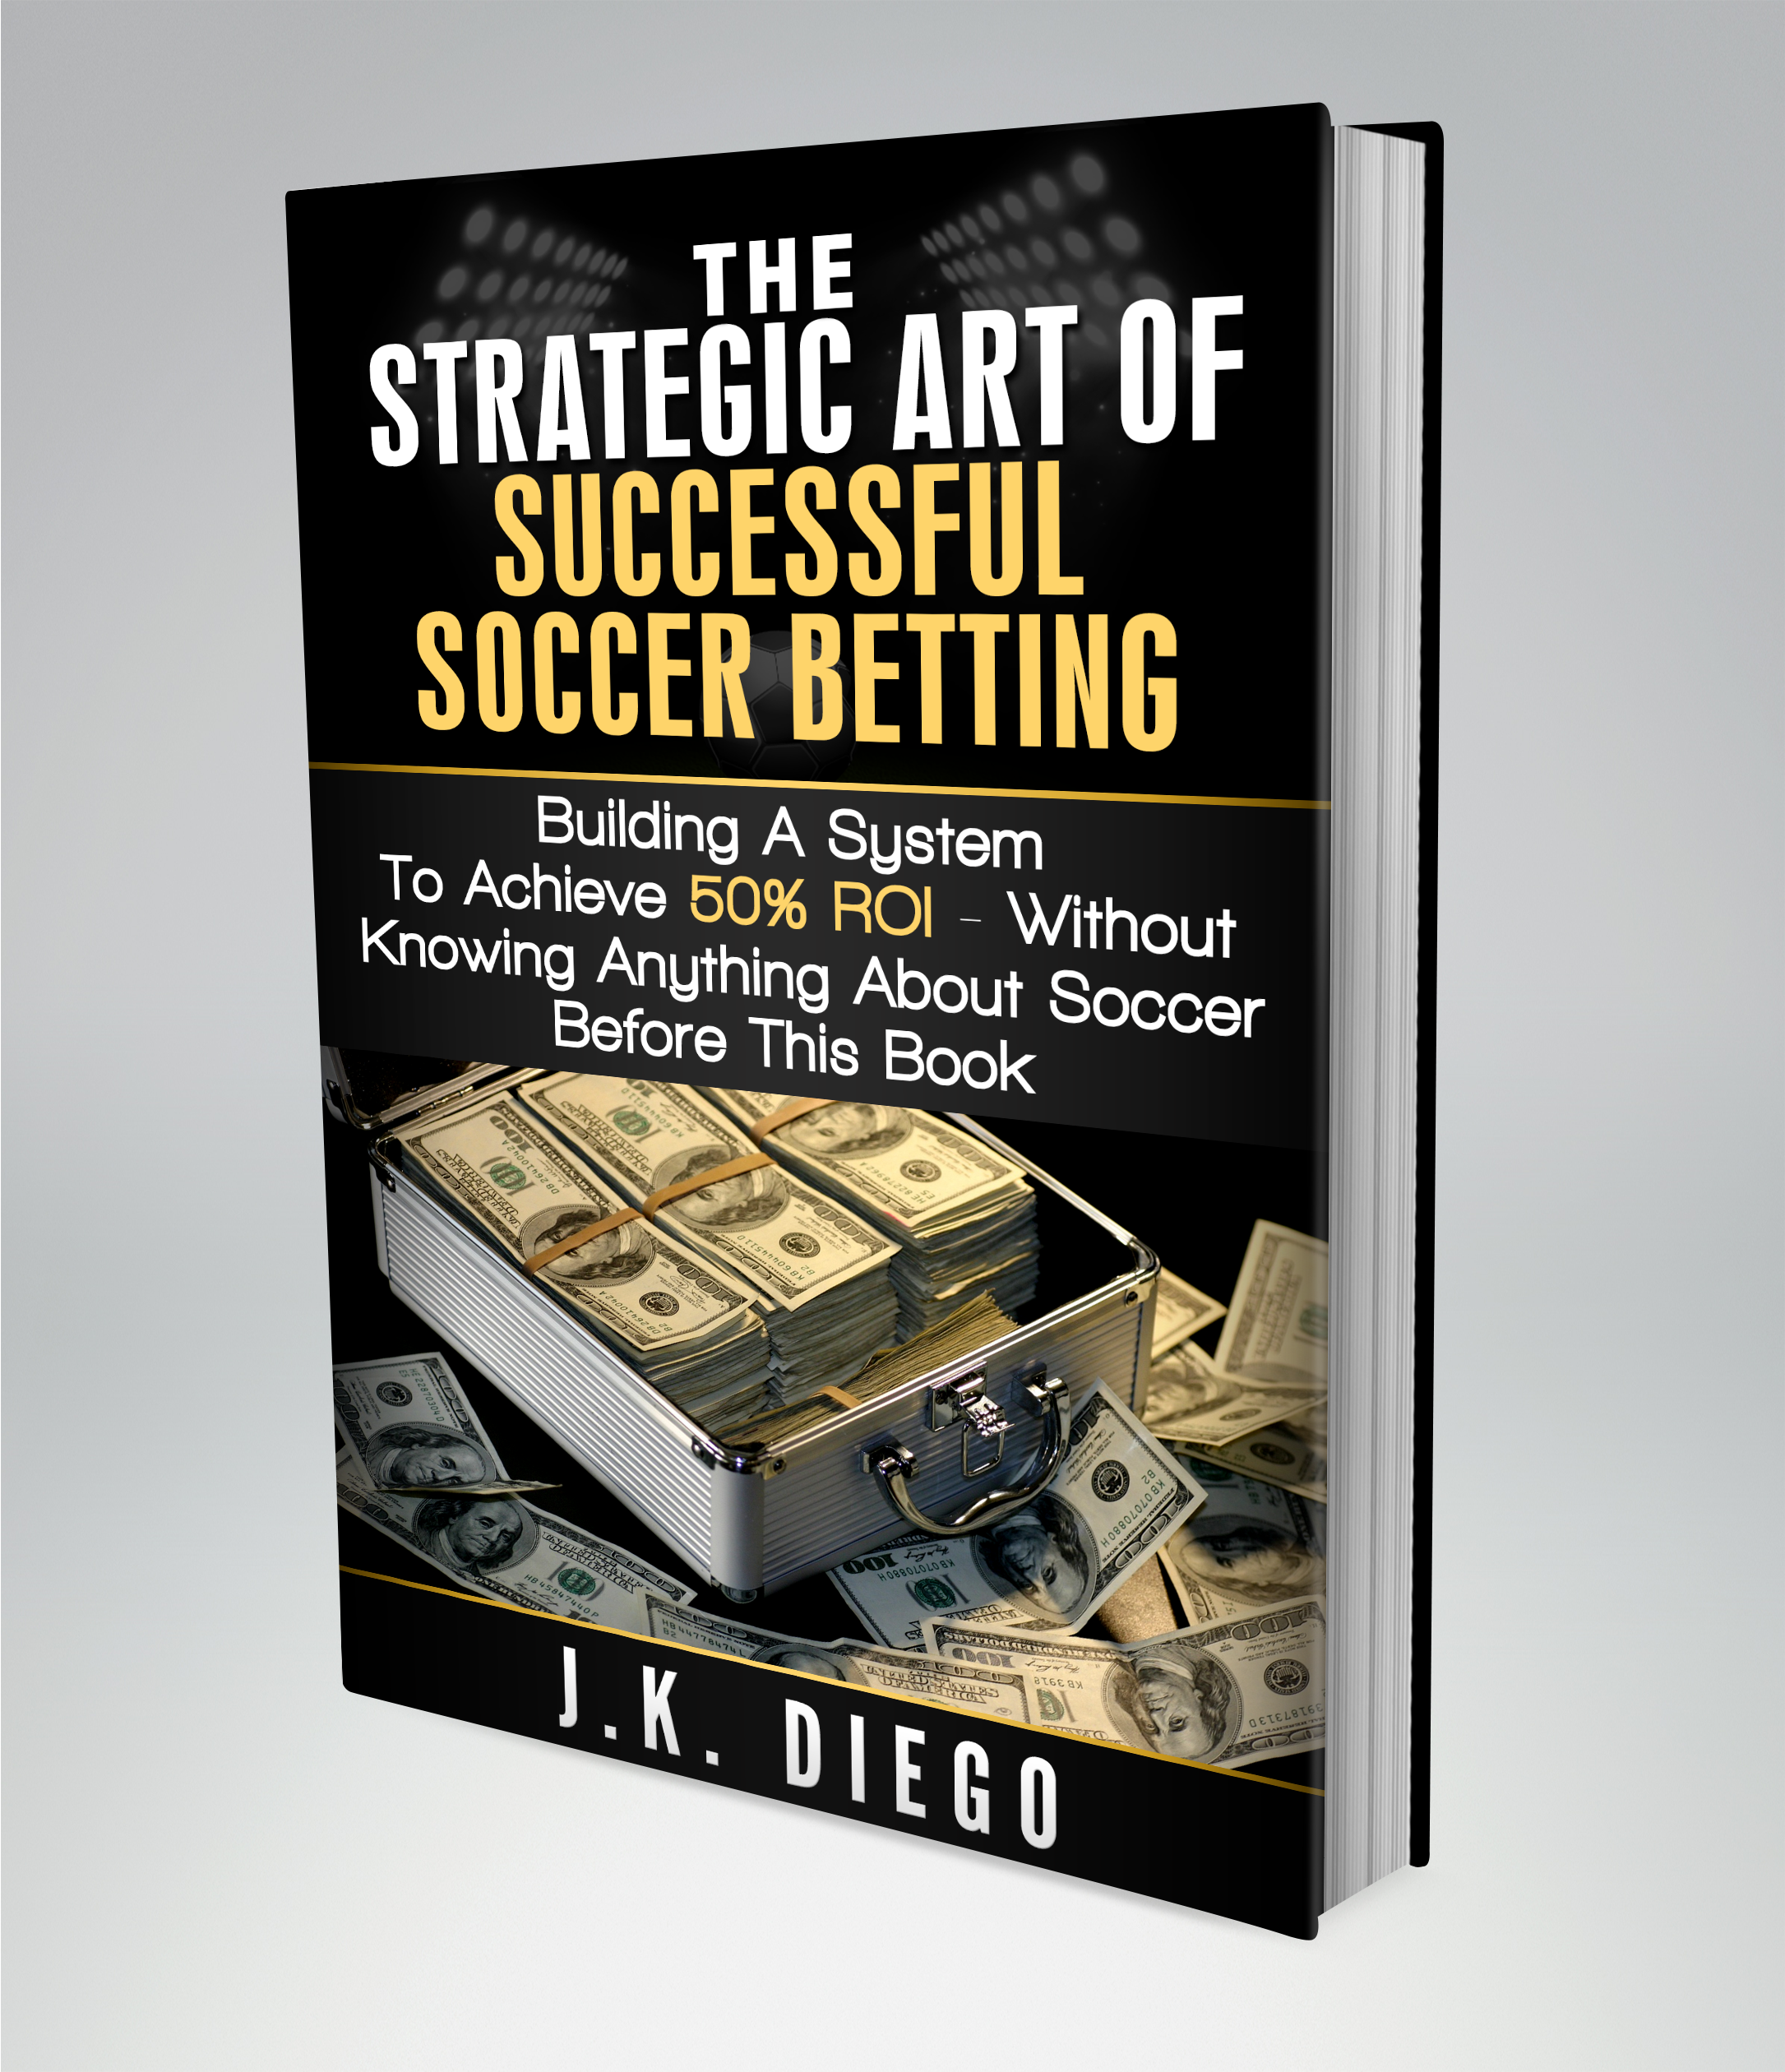 The Strategic Art of Successful Soccer Betting - J.K. Diego